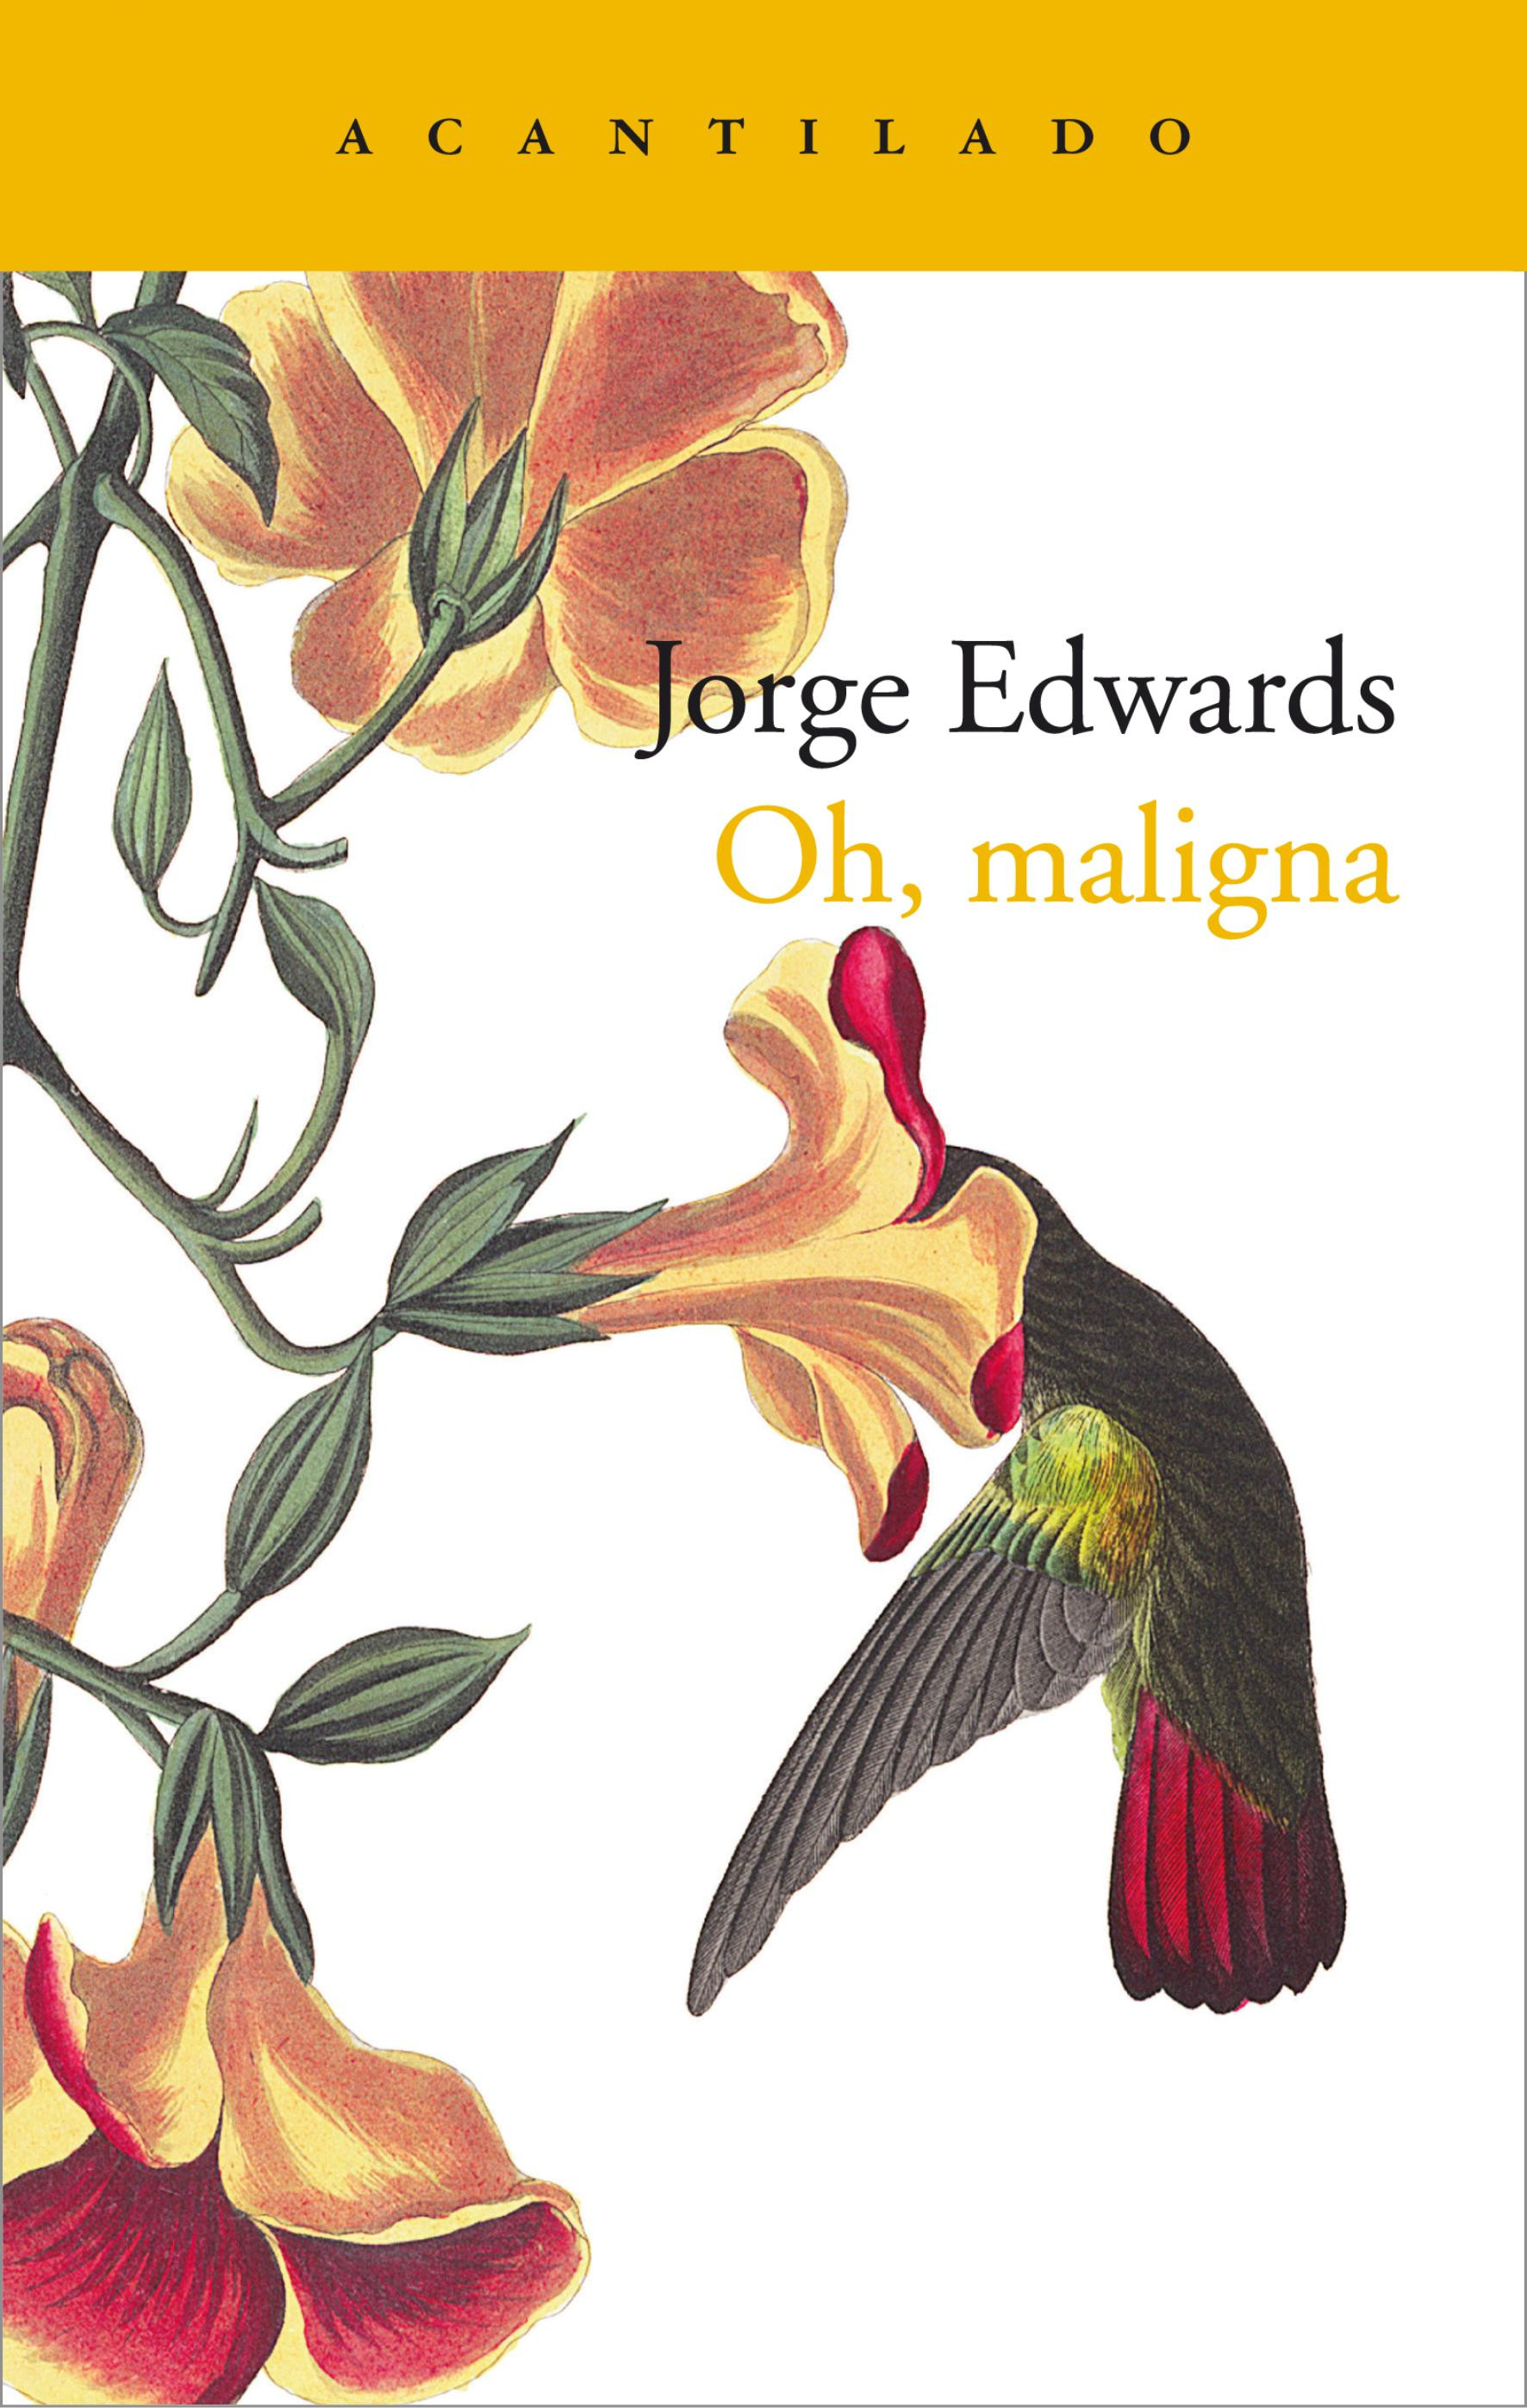 Oh, maligna, Jorge Edwards / ACANTILADO